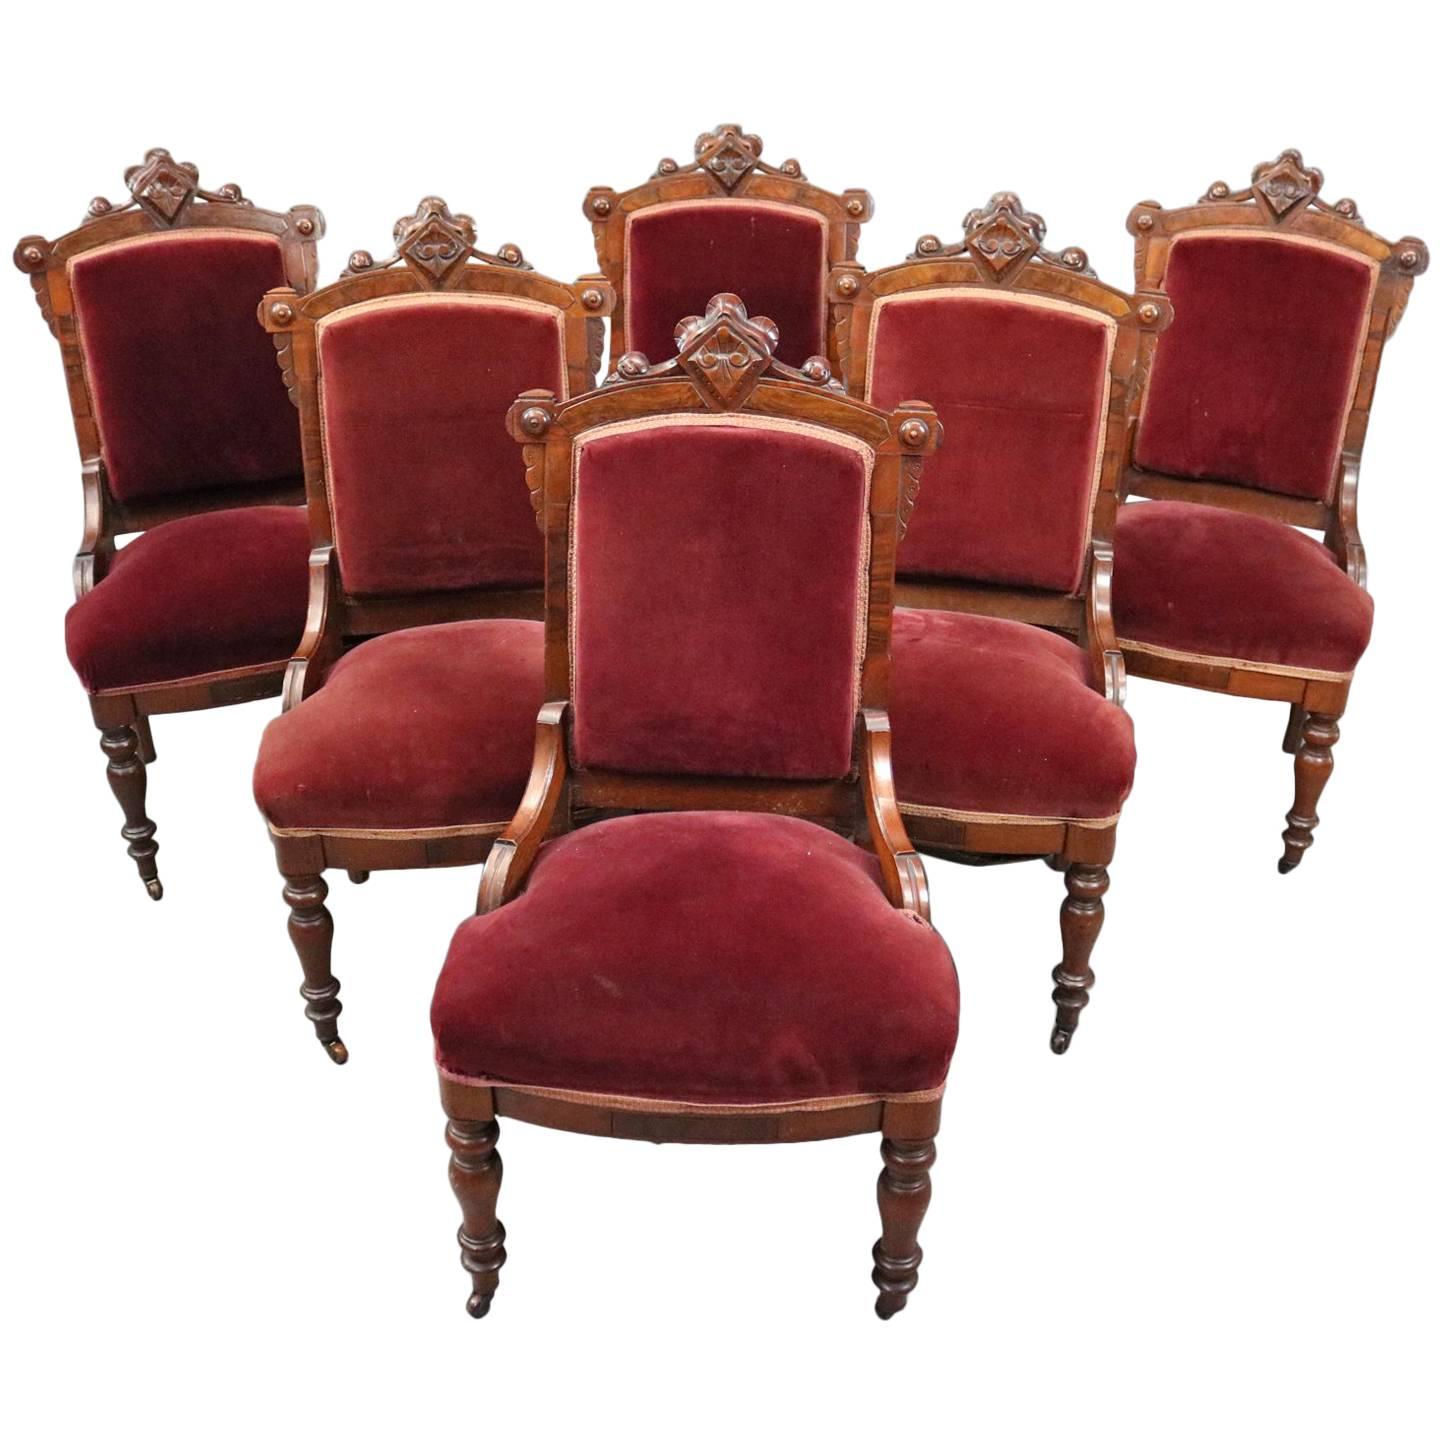 Six Antique Carved Walnut Velvet Upholstered Eastlake Dining Chairs, circa 1890